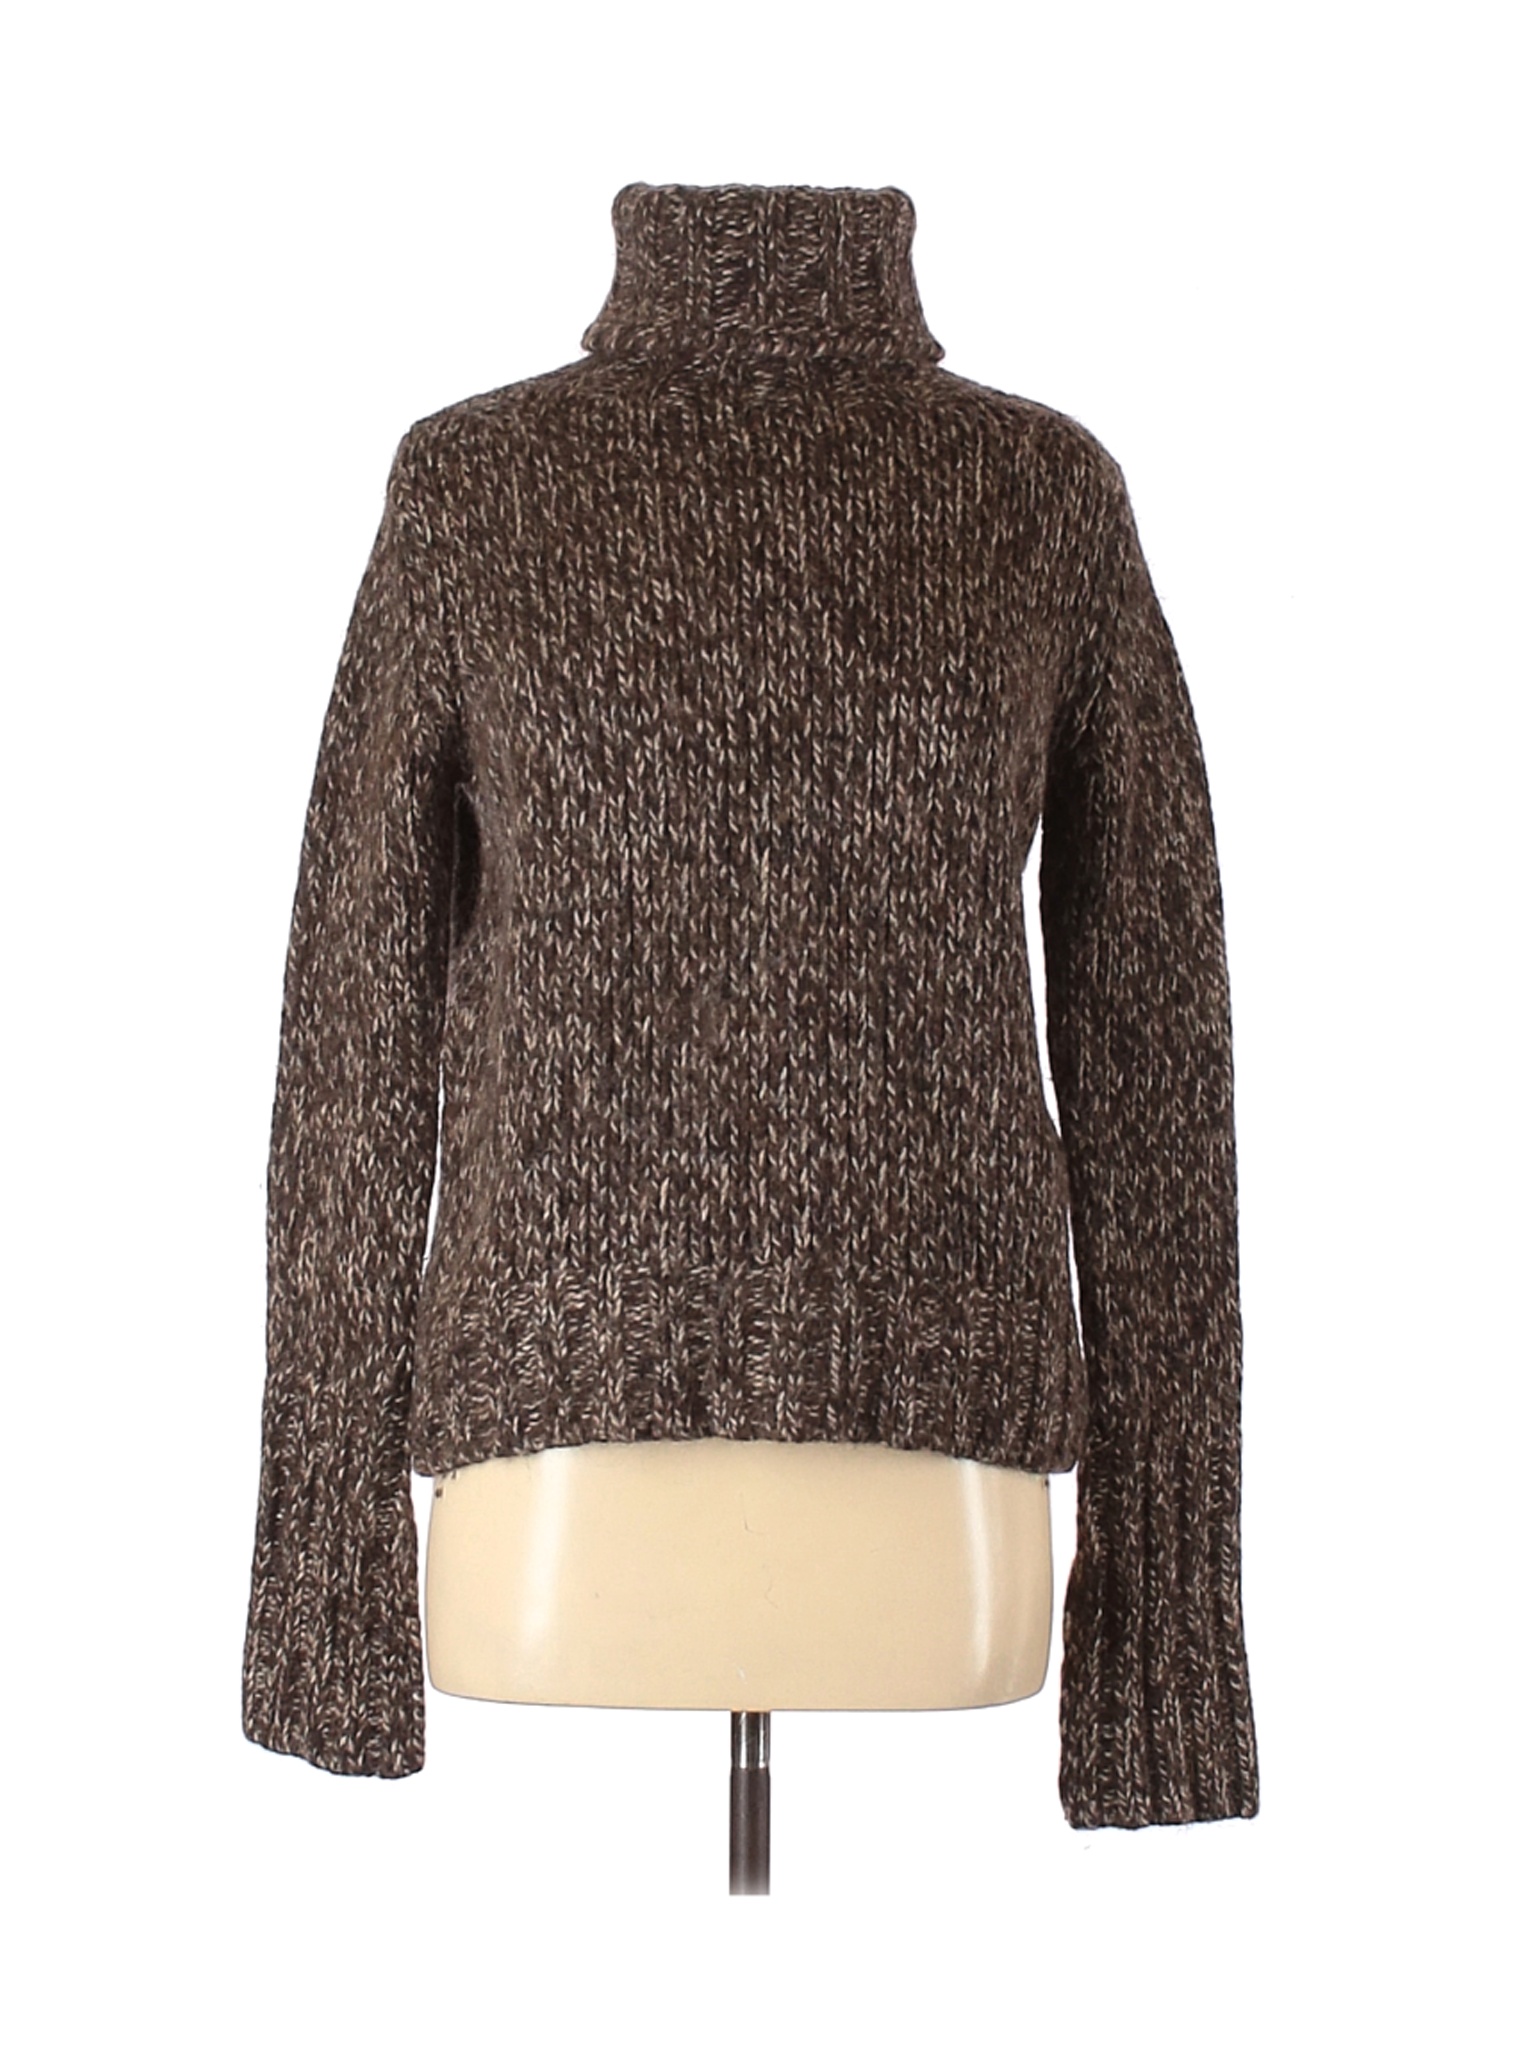 Burberry Women Brown Turtleneck Sweater M | eBay